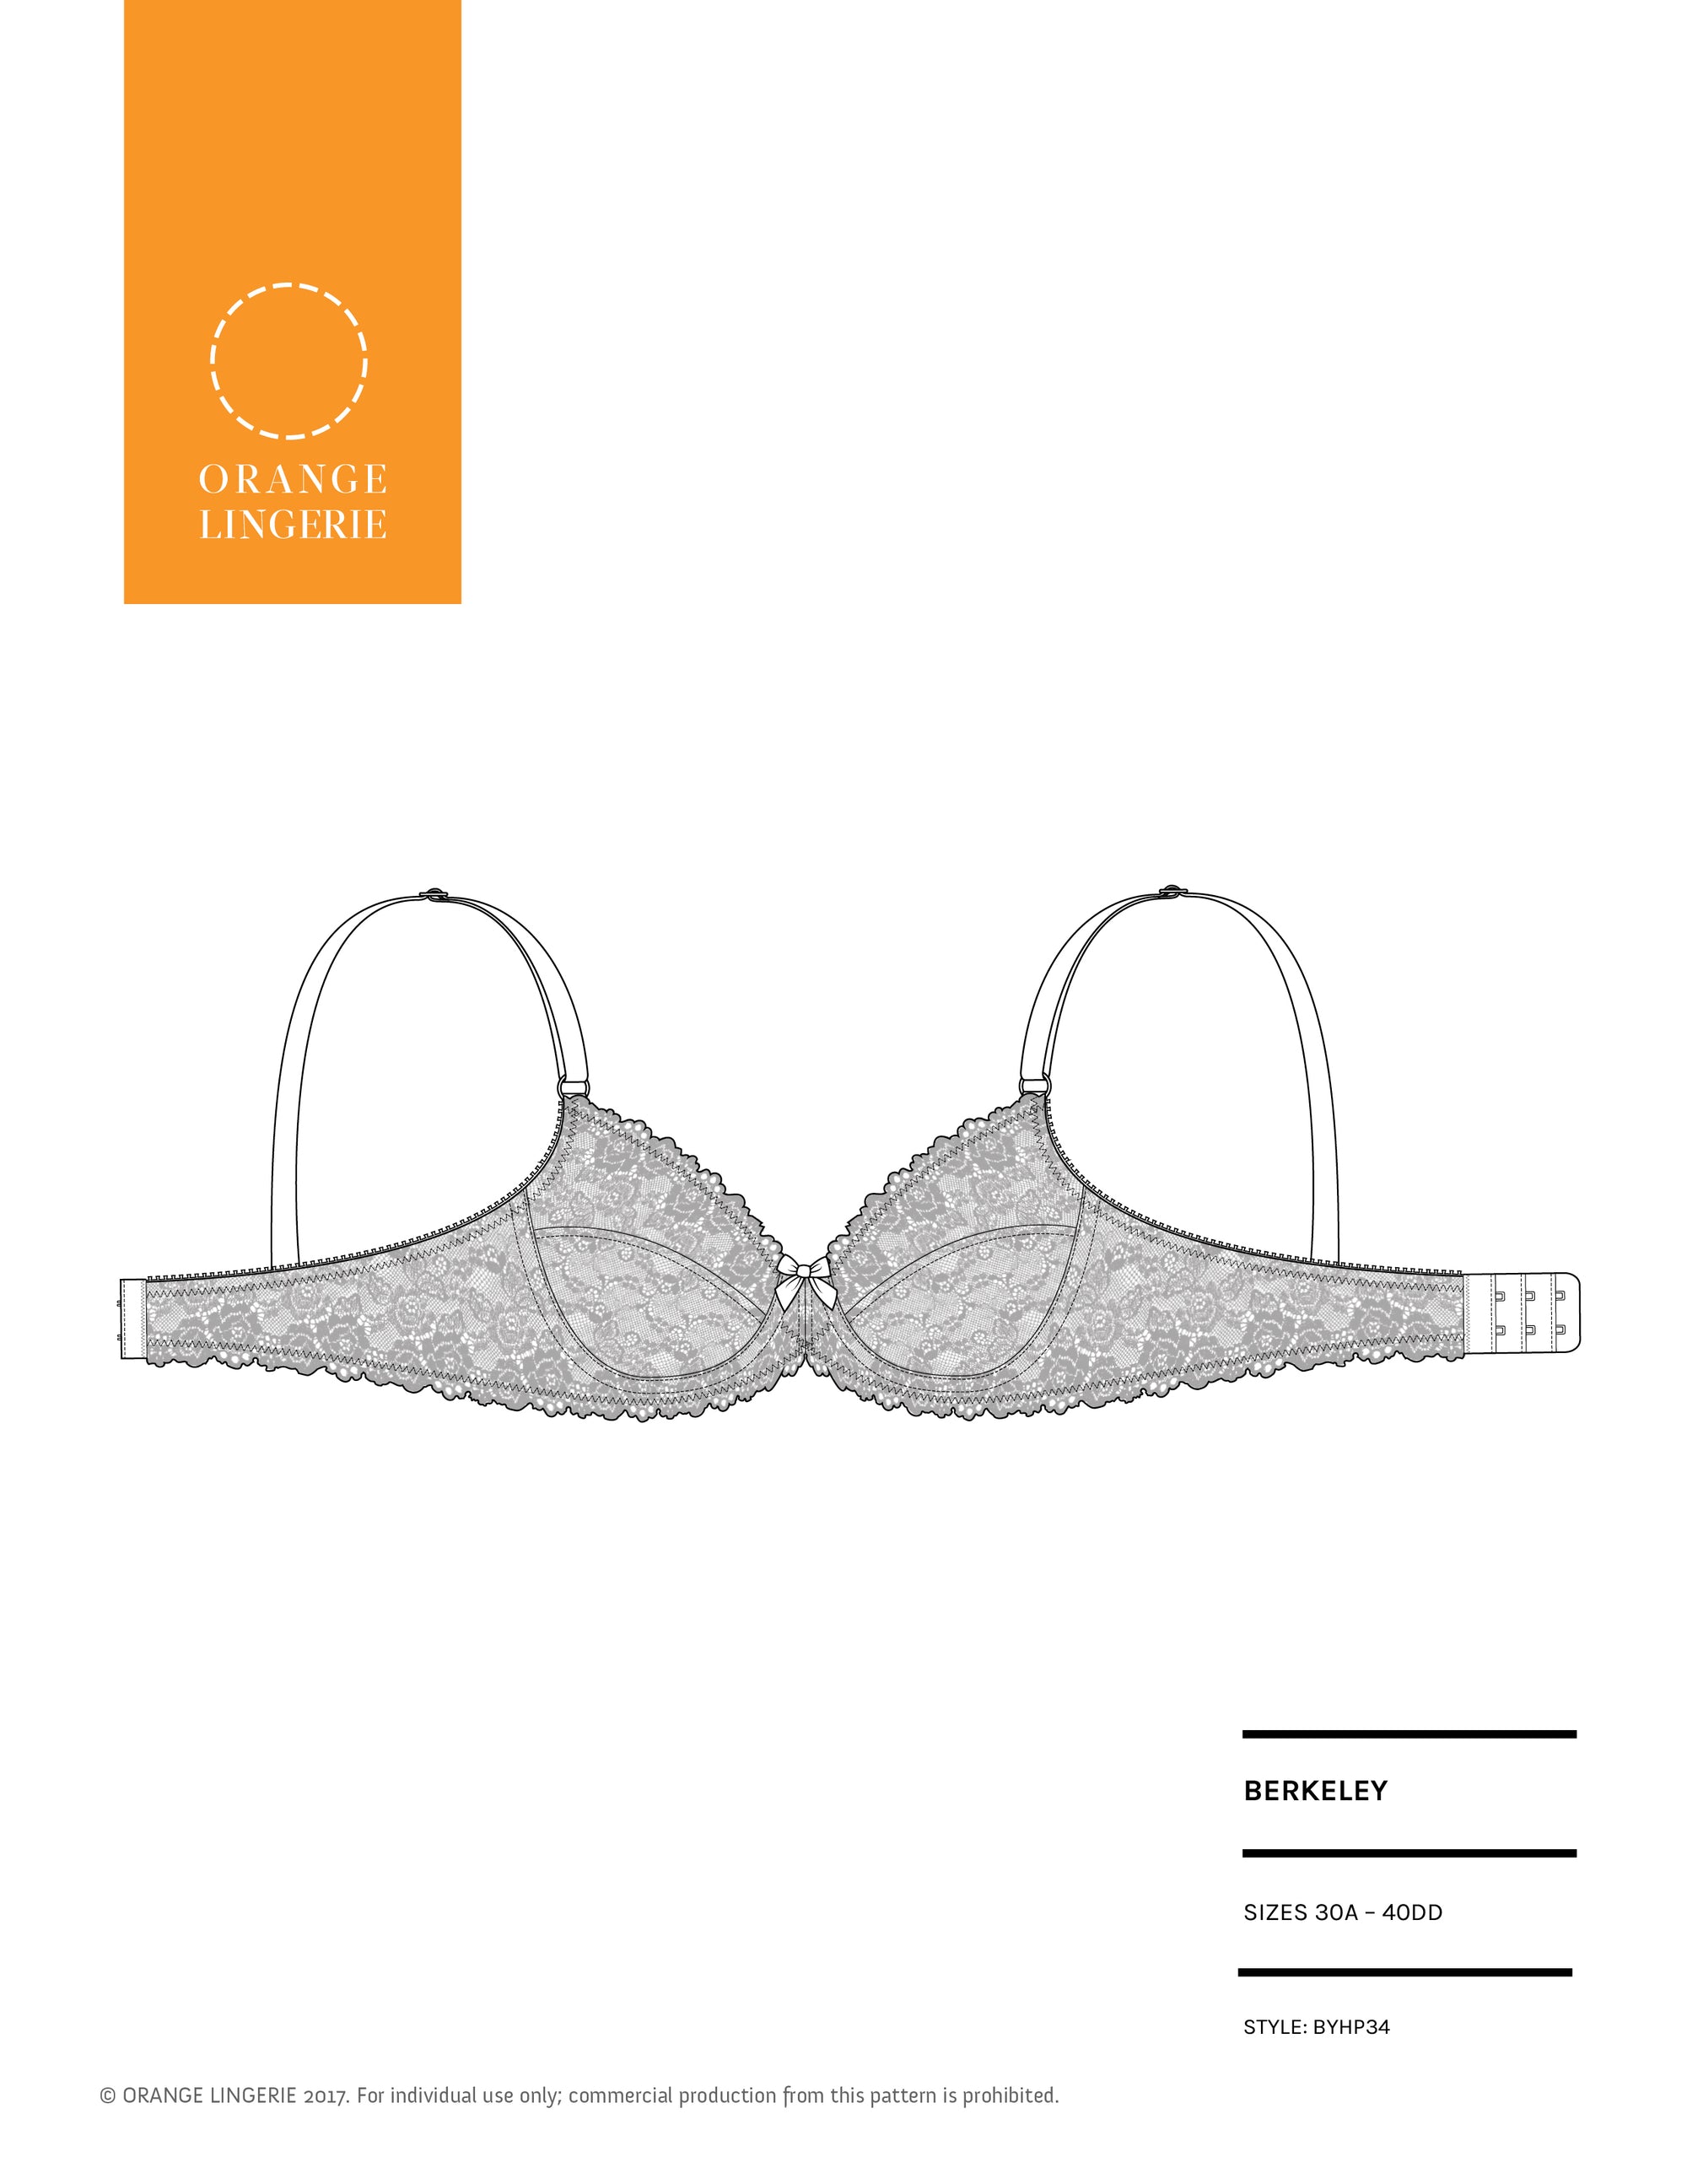 White bra on orange background.Concept, feminine brassiere